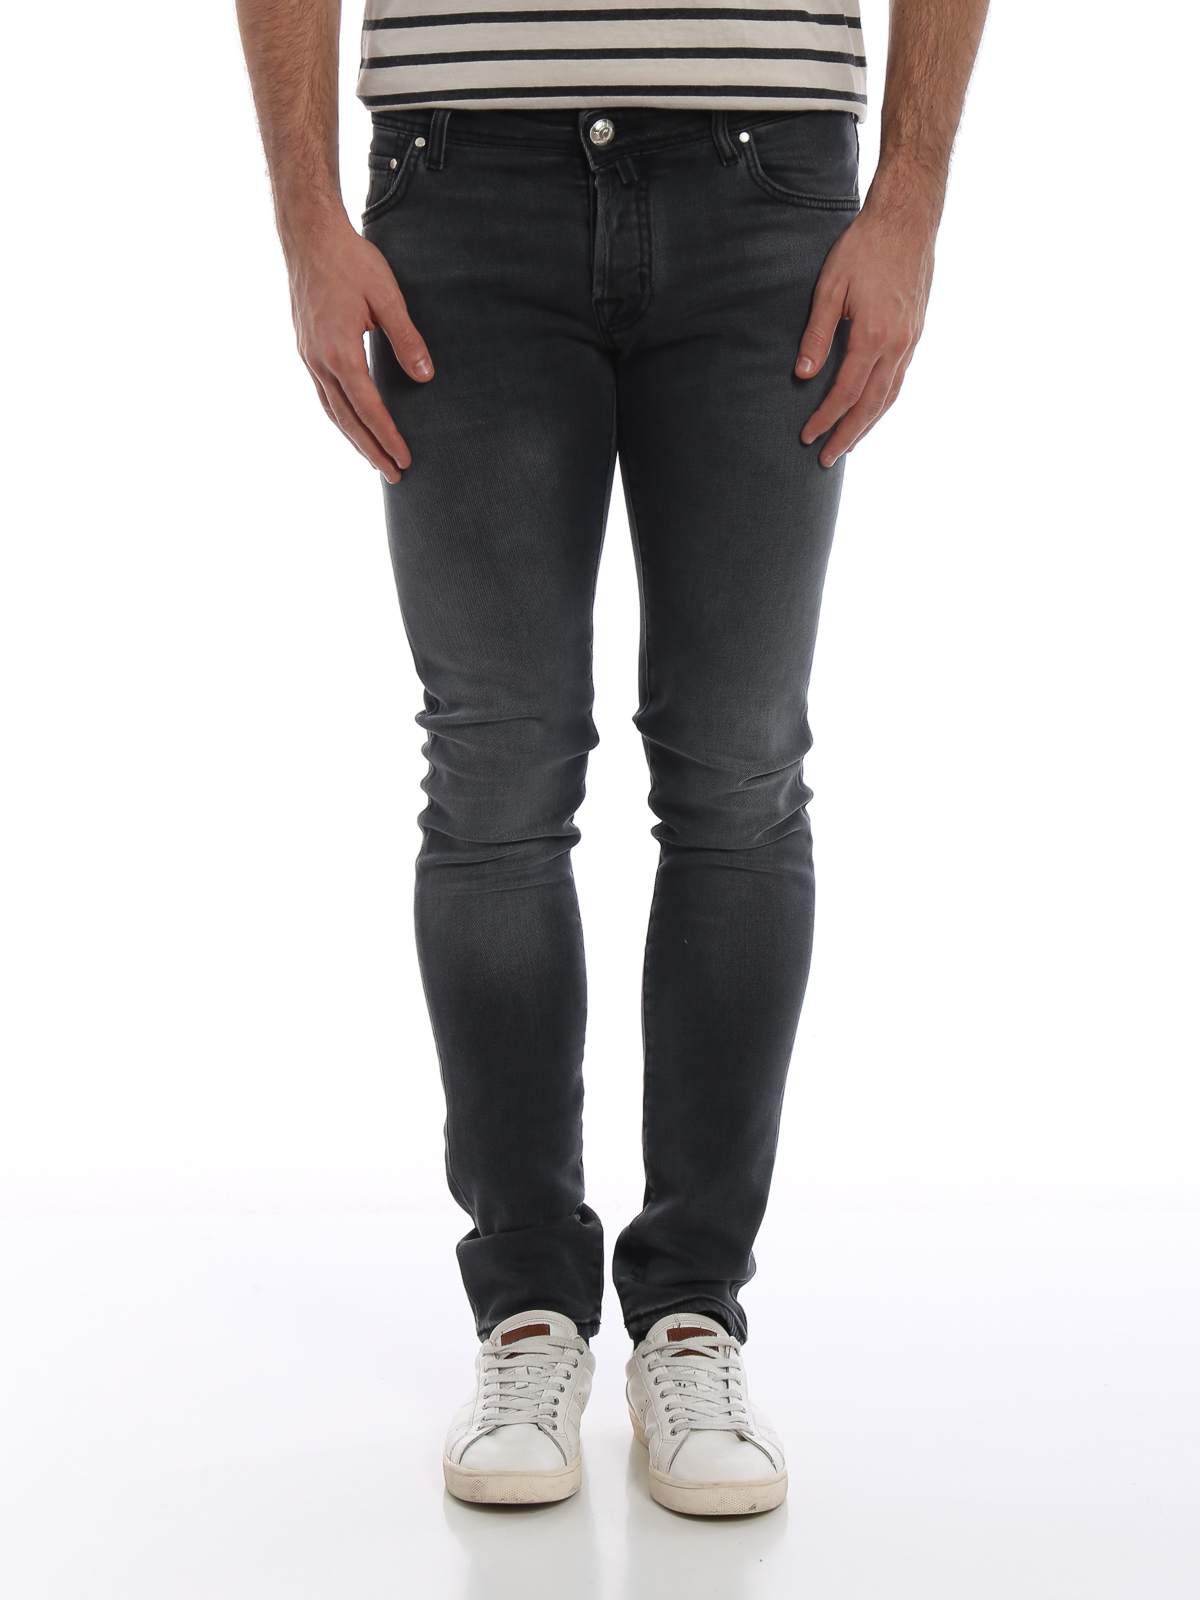 Infrarood omvang Martin Luther King Junior Skinny jeans Jacob Cohen - Grey denim slim fitting jeans -  PW622SLIMCOMF00733W35002003